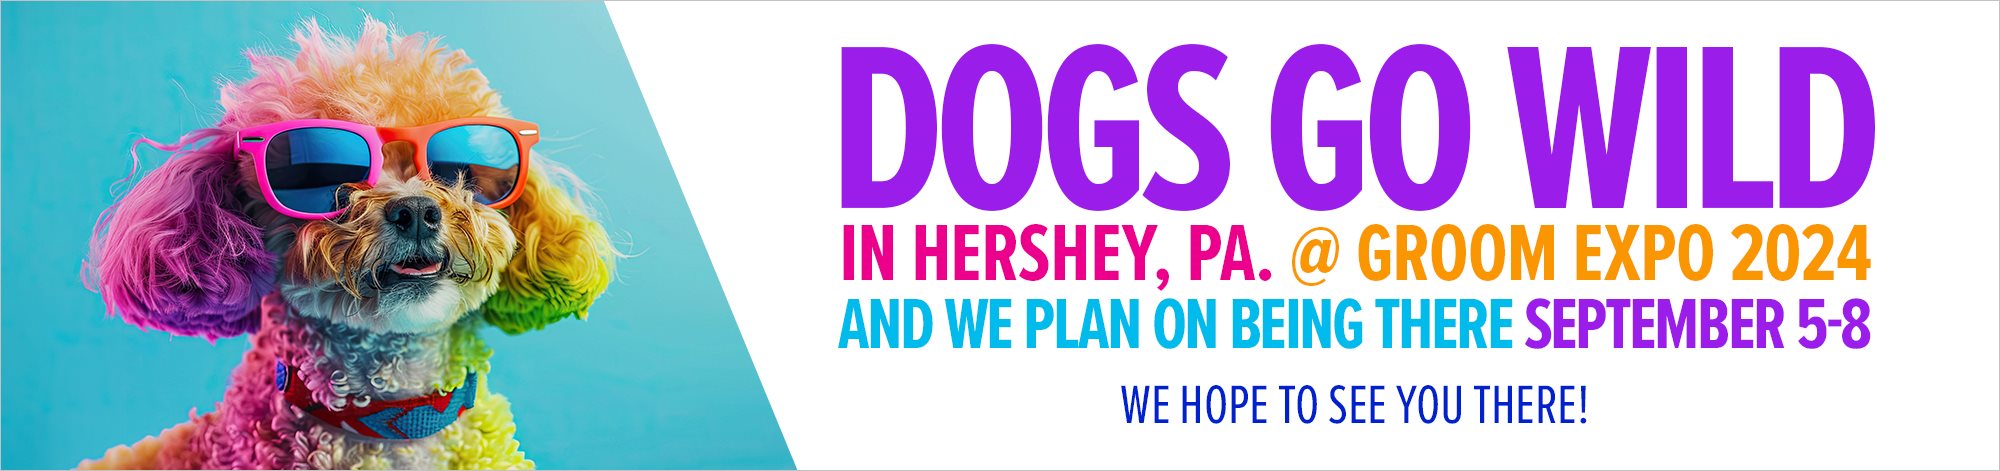 Dogs go wild in Hershey, PA @ Groom Expo 2024 September 5-8